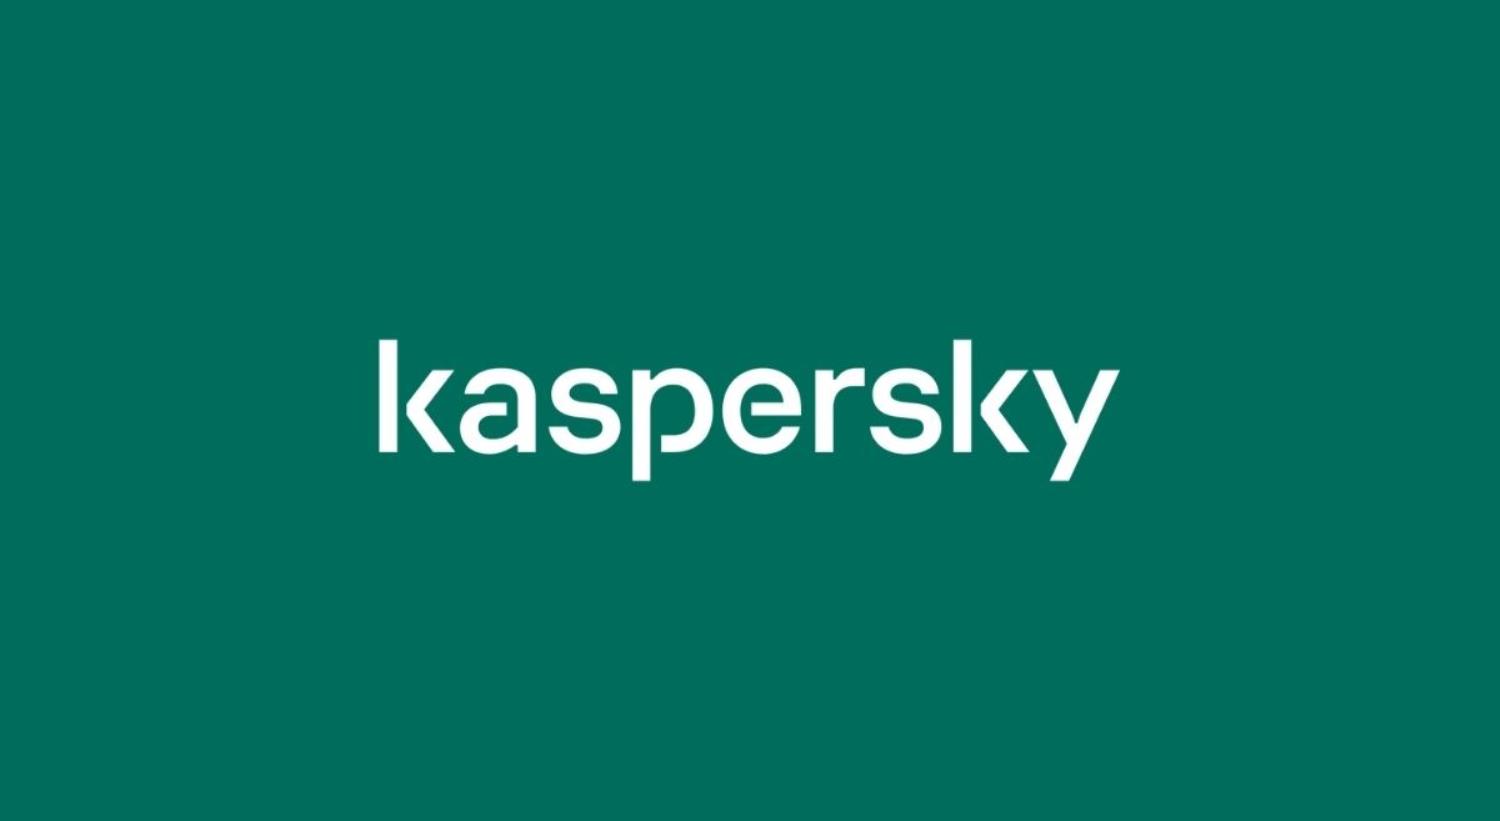 Kaspersky Embedded Systems